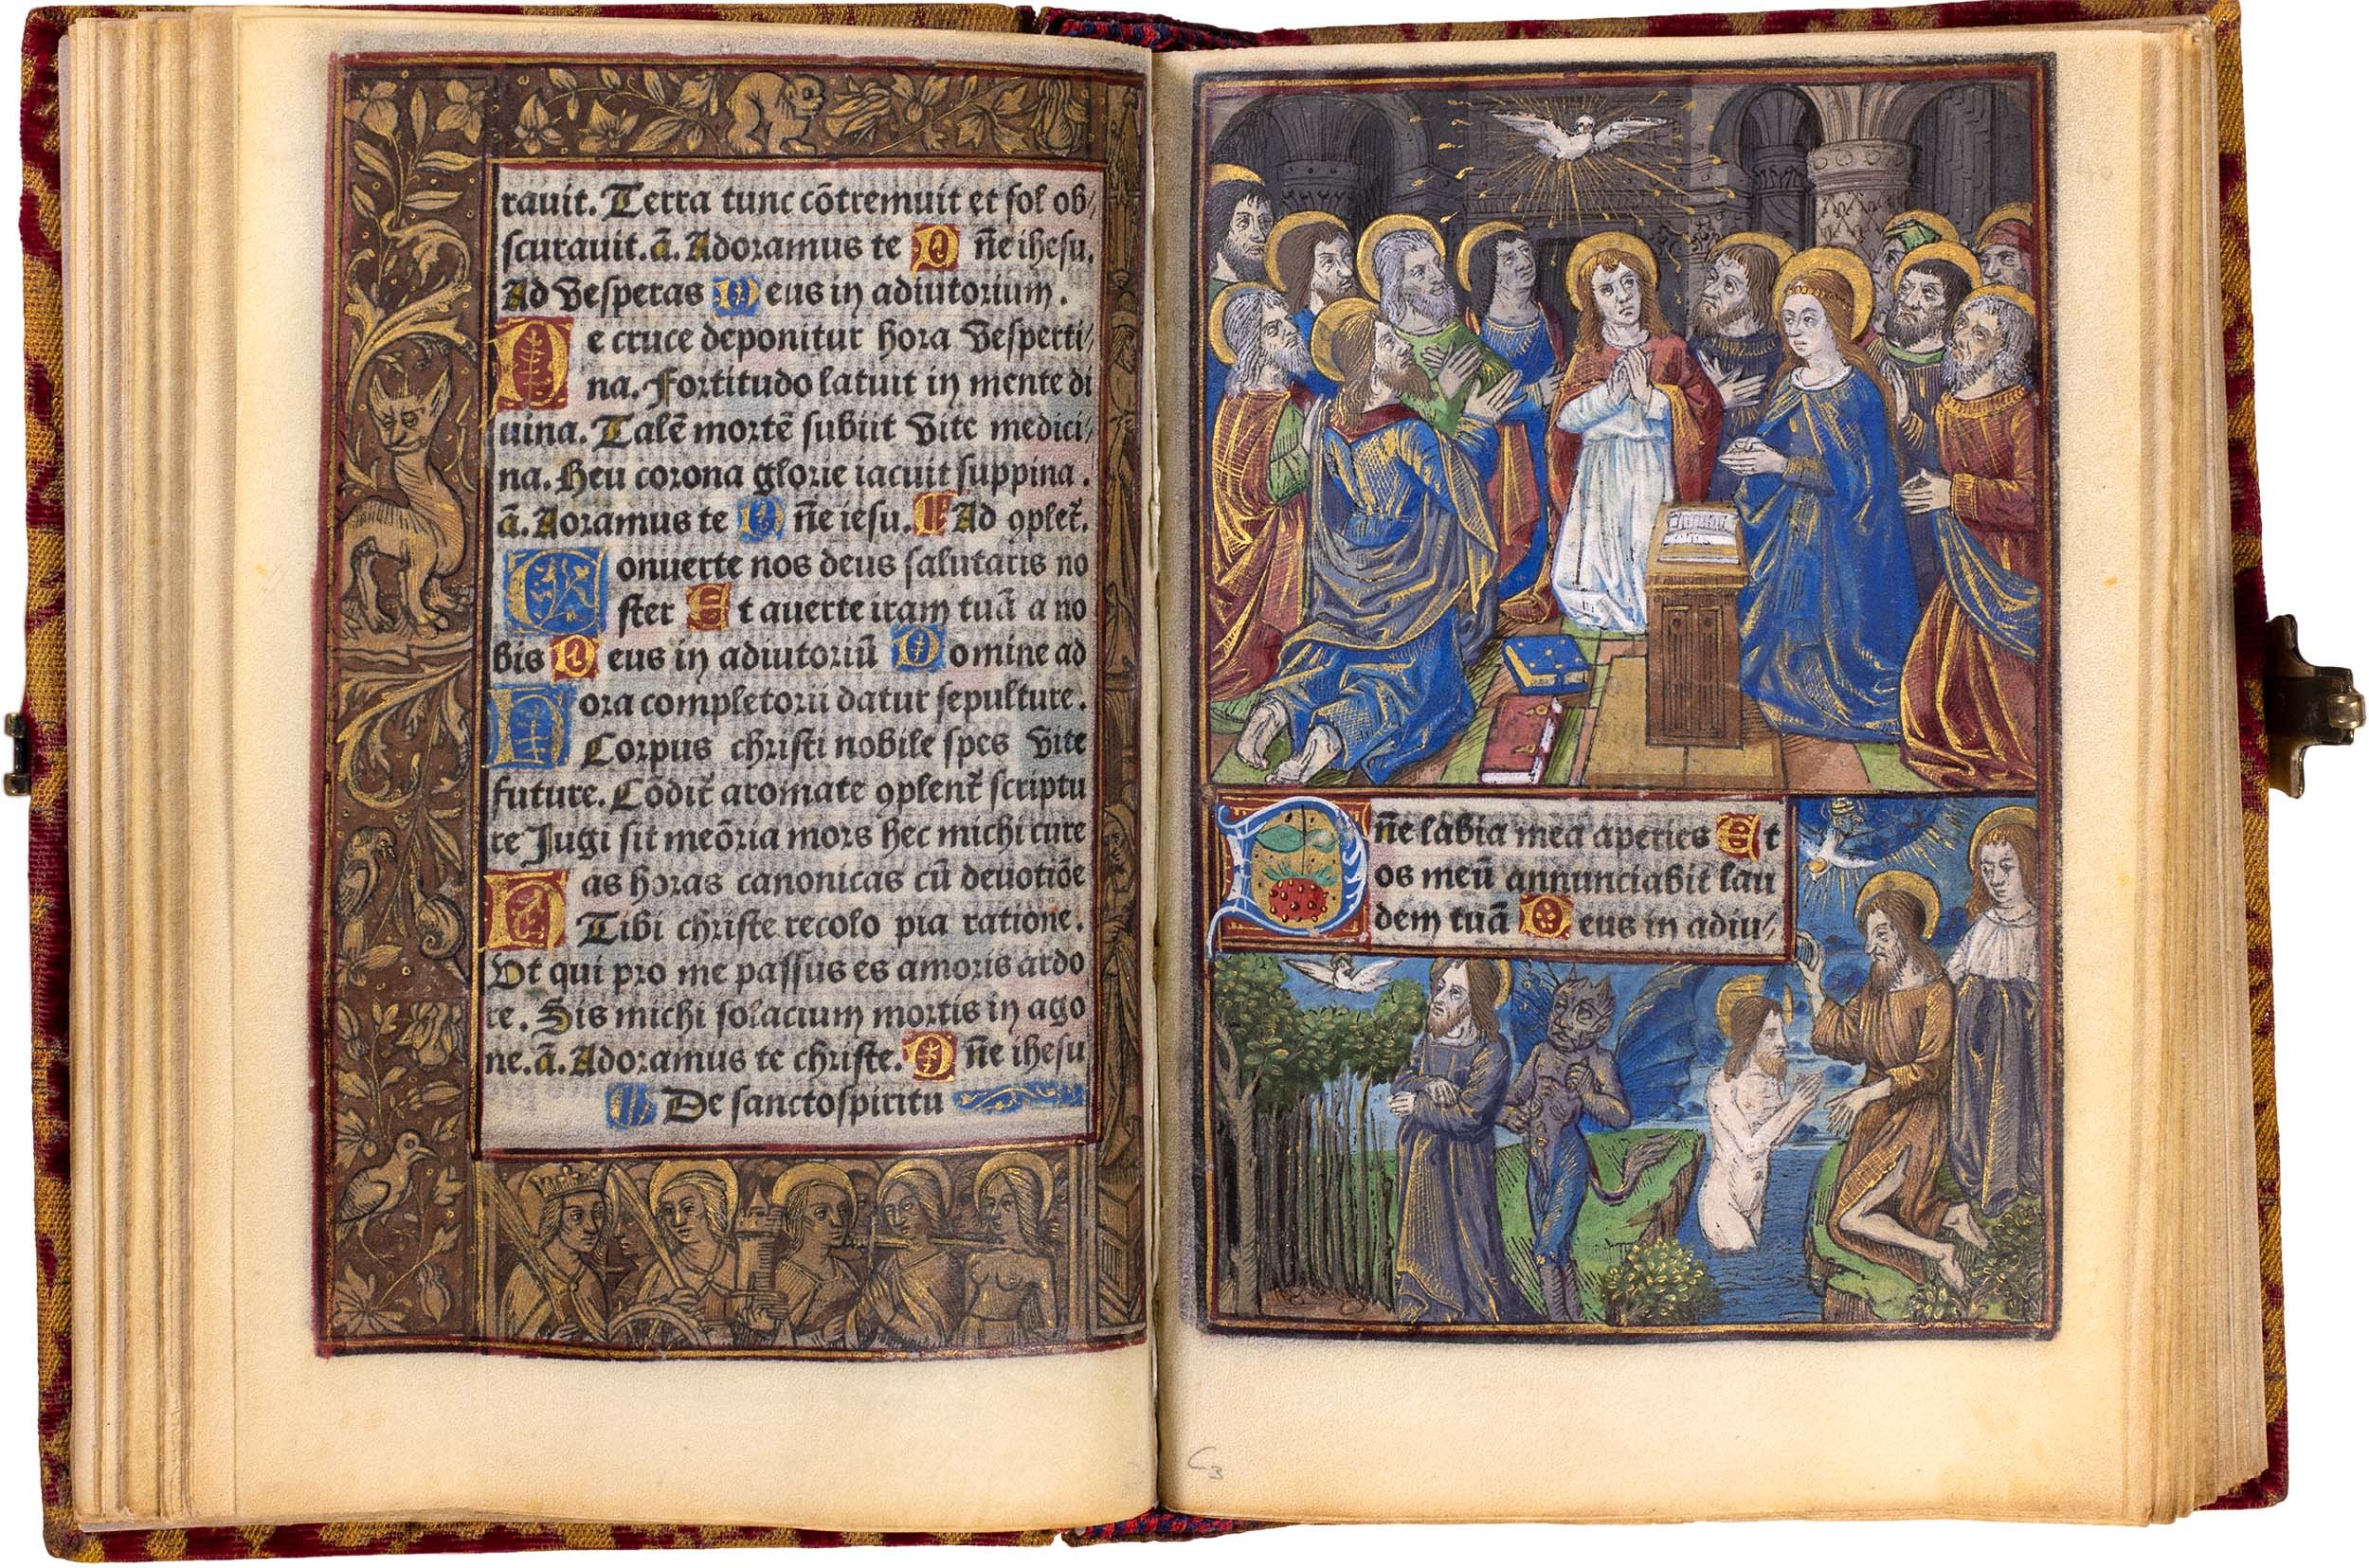 Horae-bmv-1488-gamma-dupre-printed-book-of-hours-danse-macabre-camaieu-dor-illuminated-vellum-copy-45.jpg